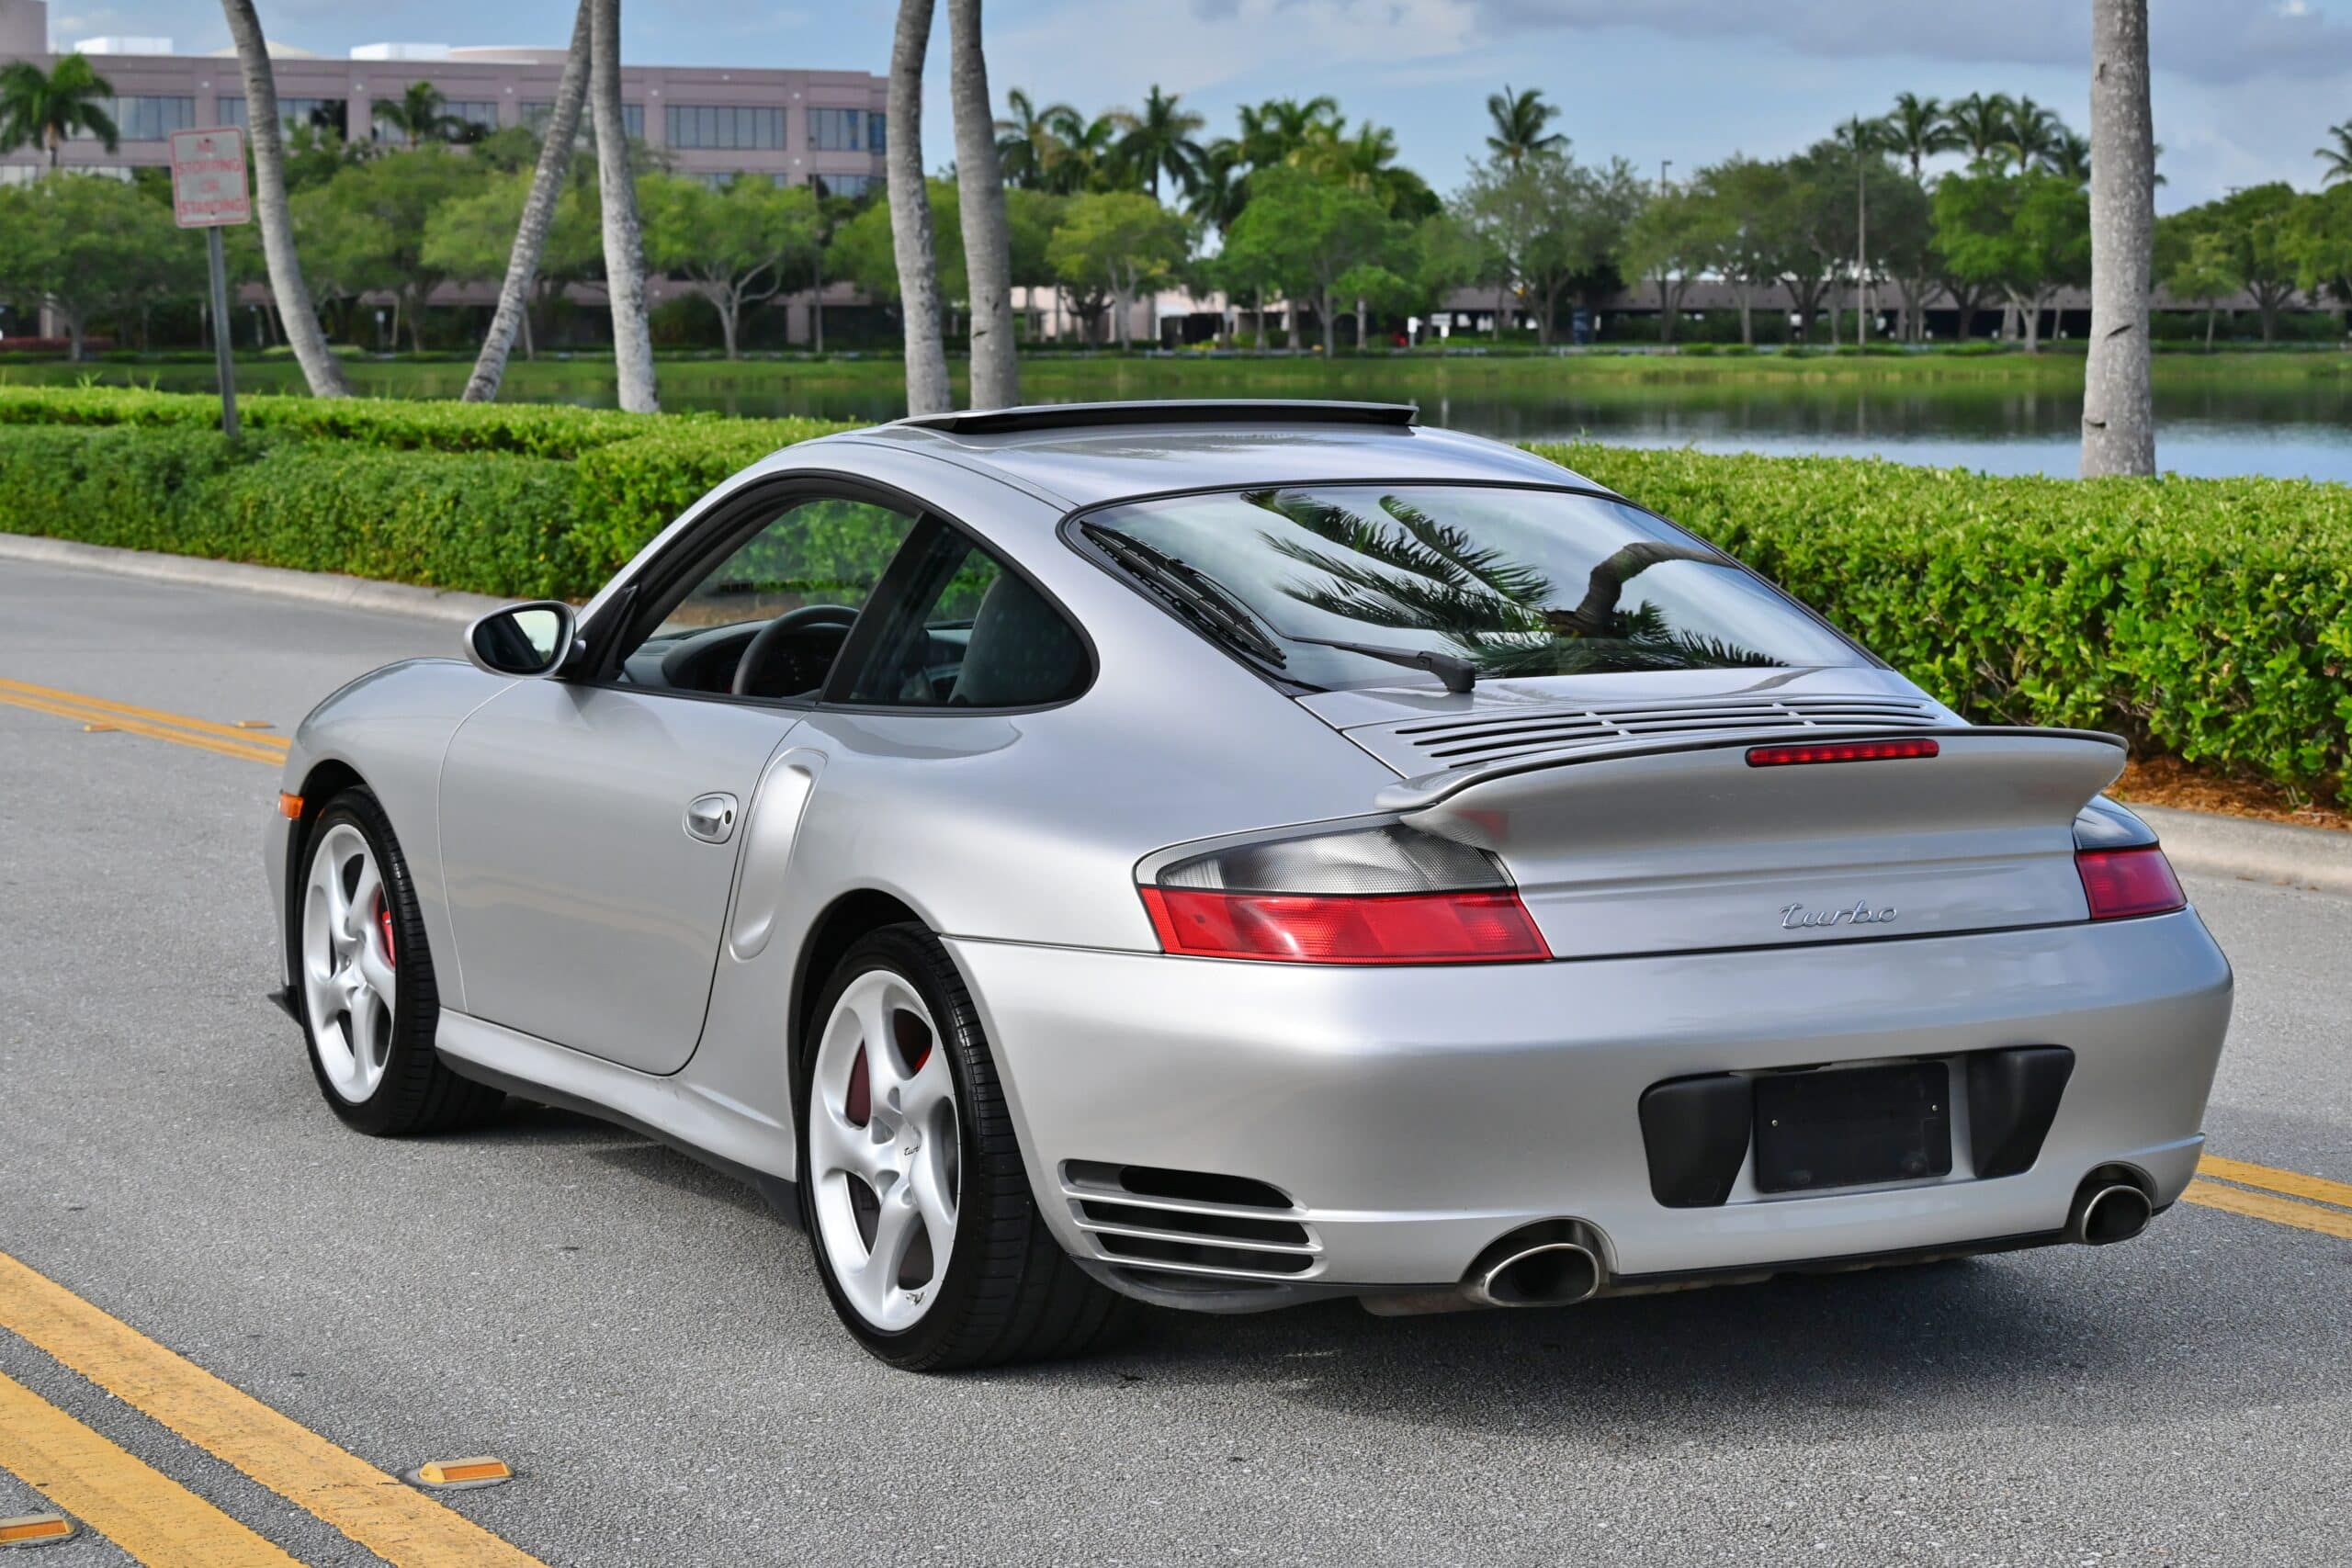 2002 Porsche 911 Turbo 996 1 Owner – 13k Actual Miles – Original Title – 100% Stock Unmodified – Texas Car